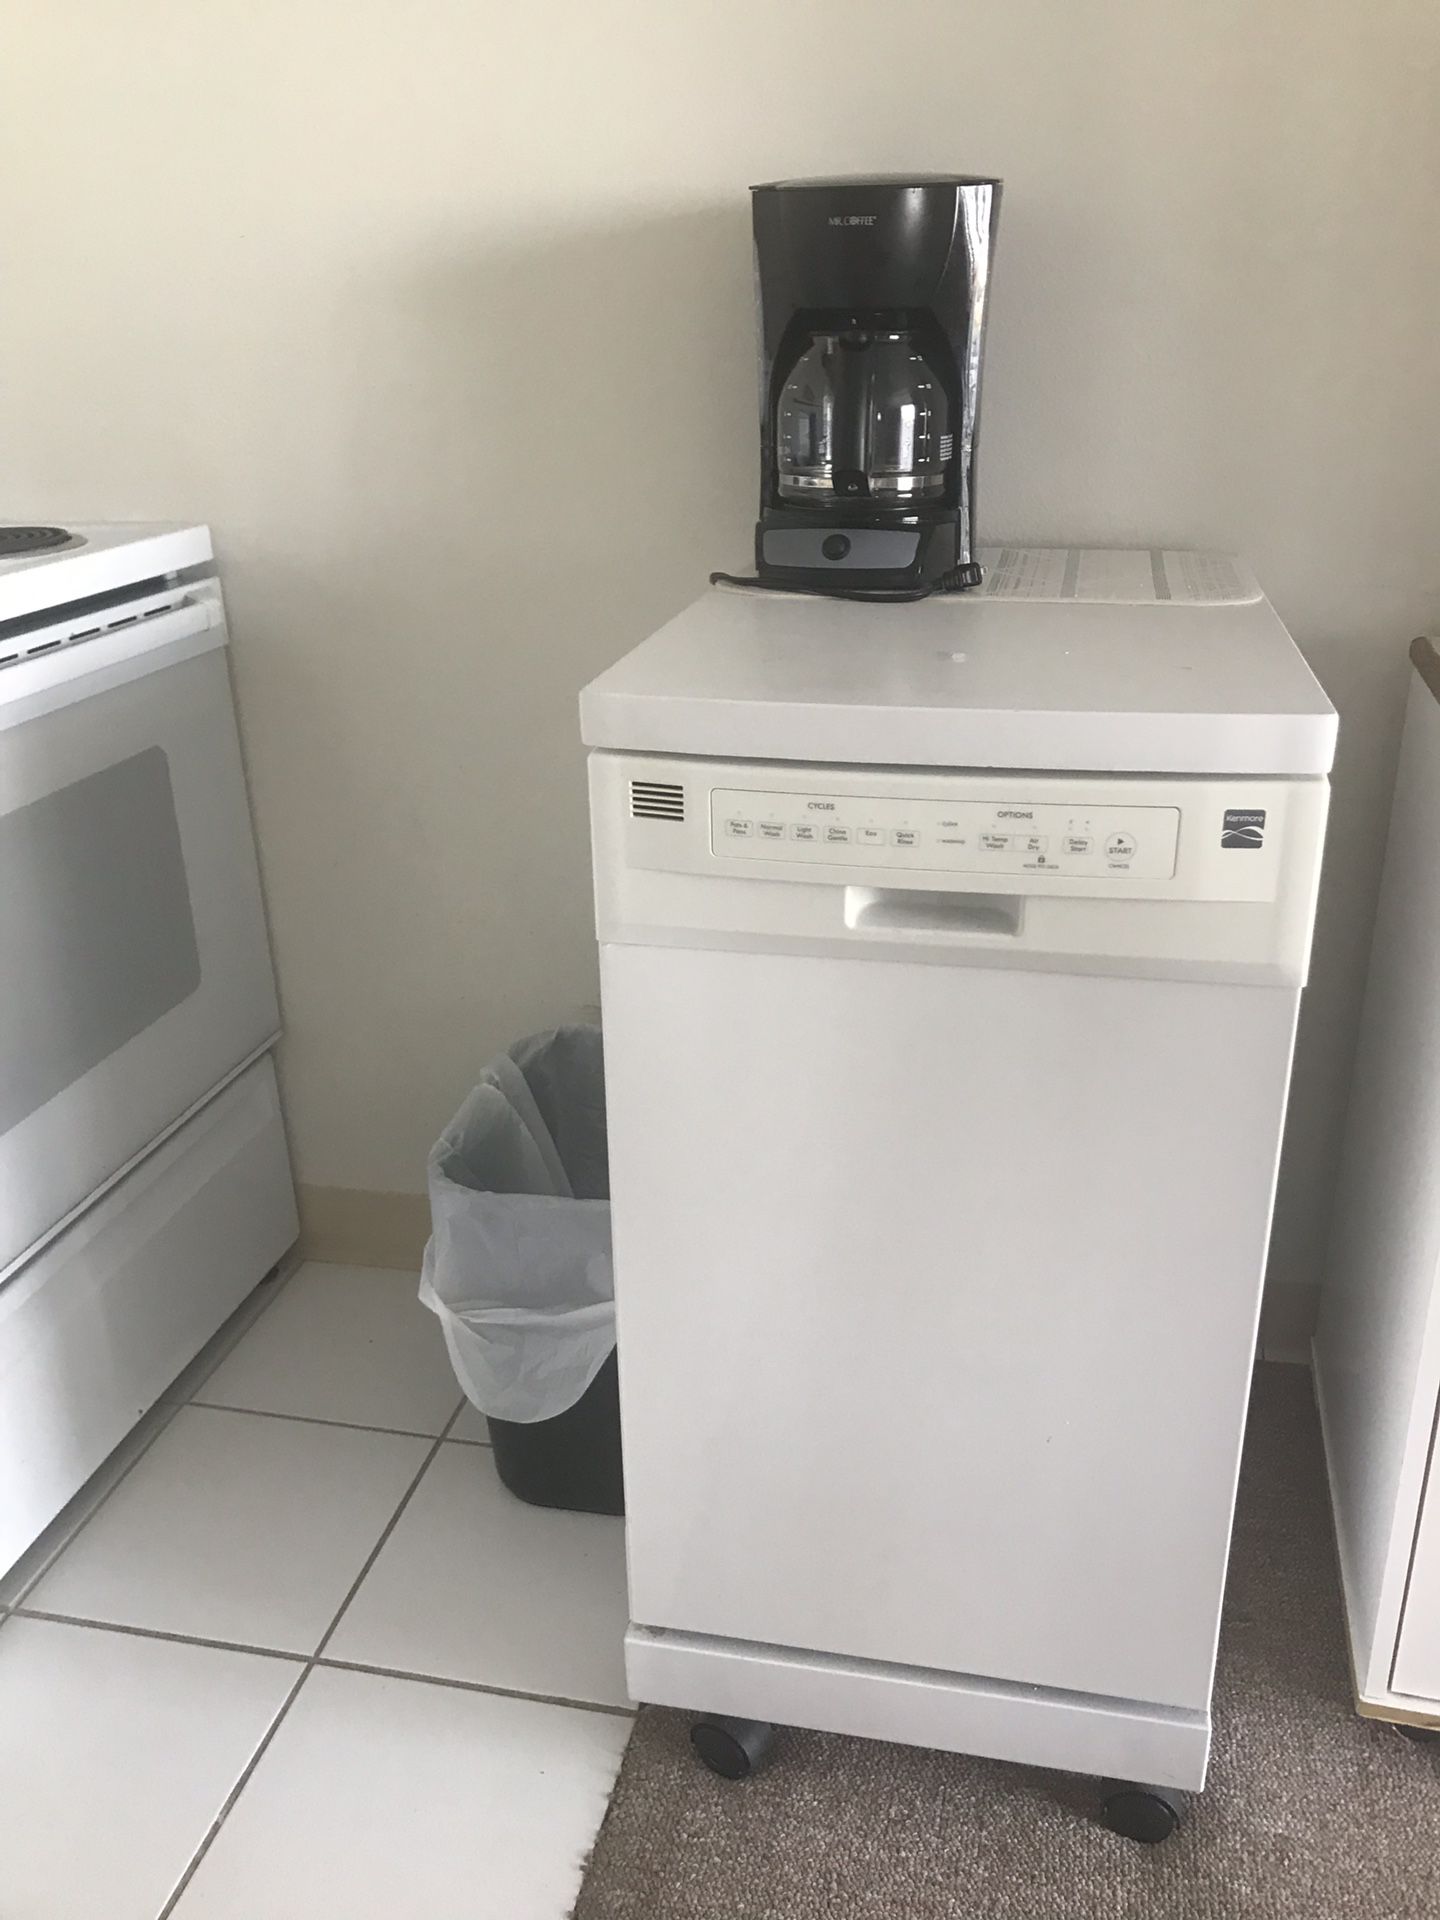 Portable dishwasher sears Kenmore white